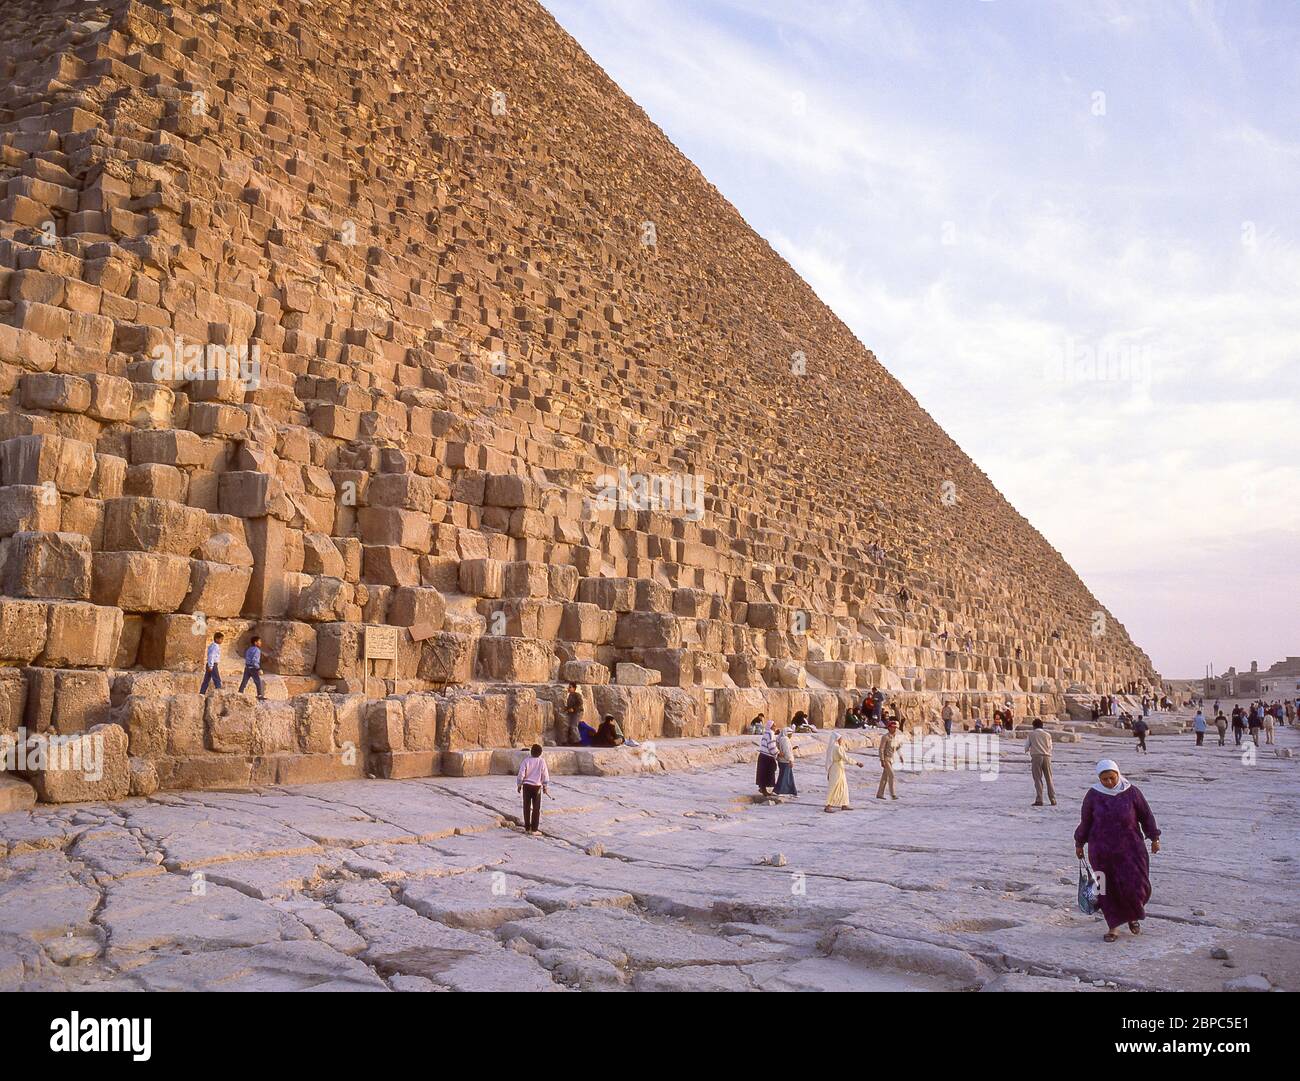 The Great Pyramid of Giza, Giza, Giza Governate, Republic of Egypt Stock Photo